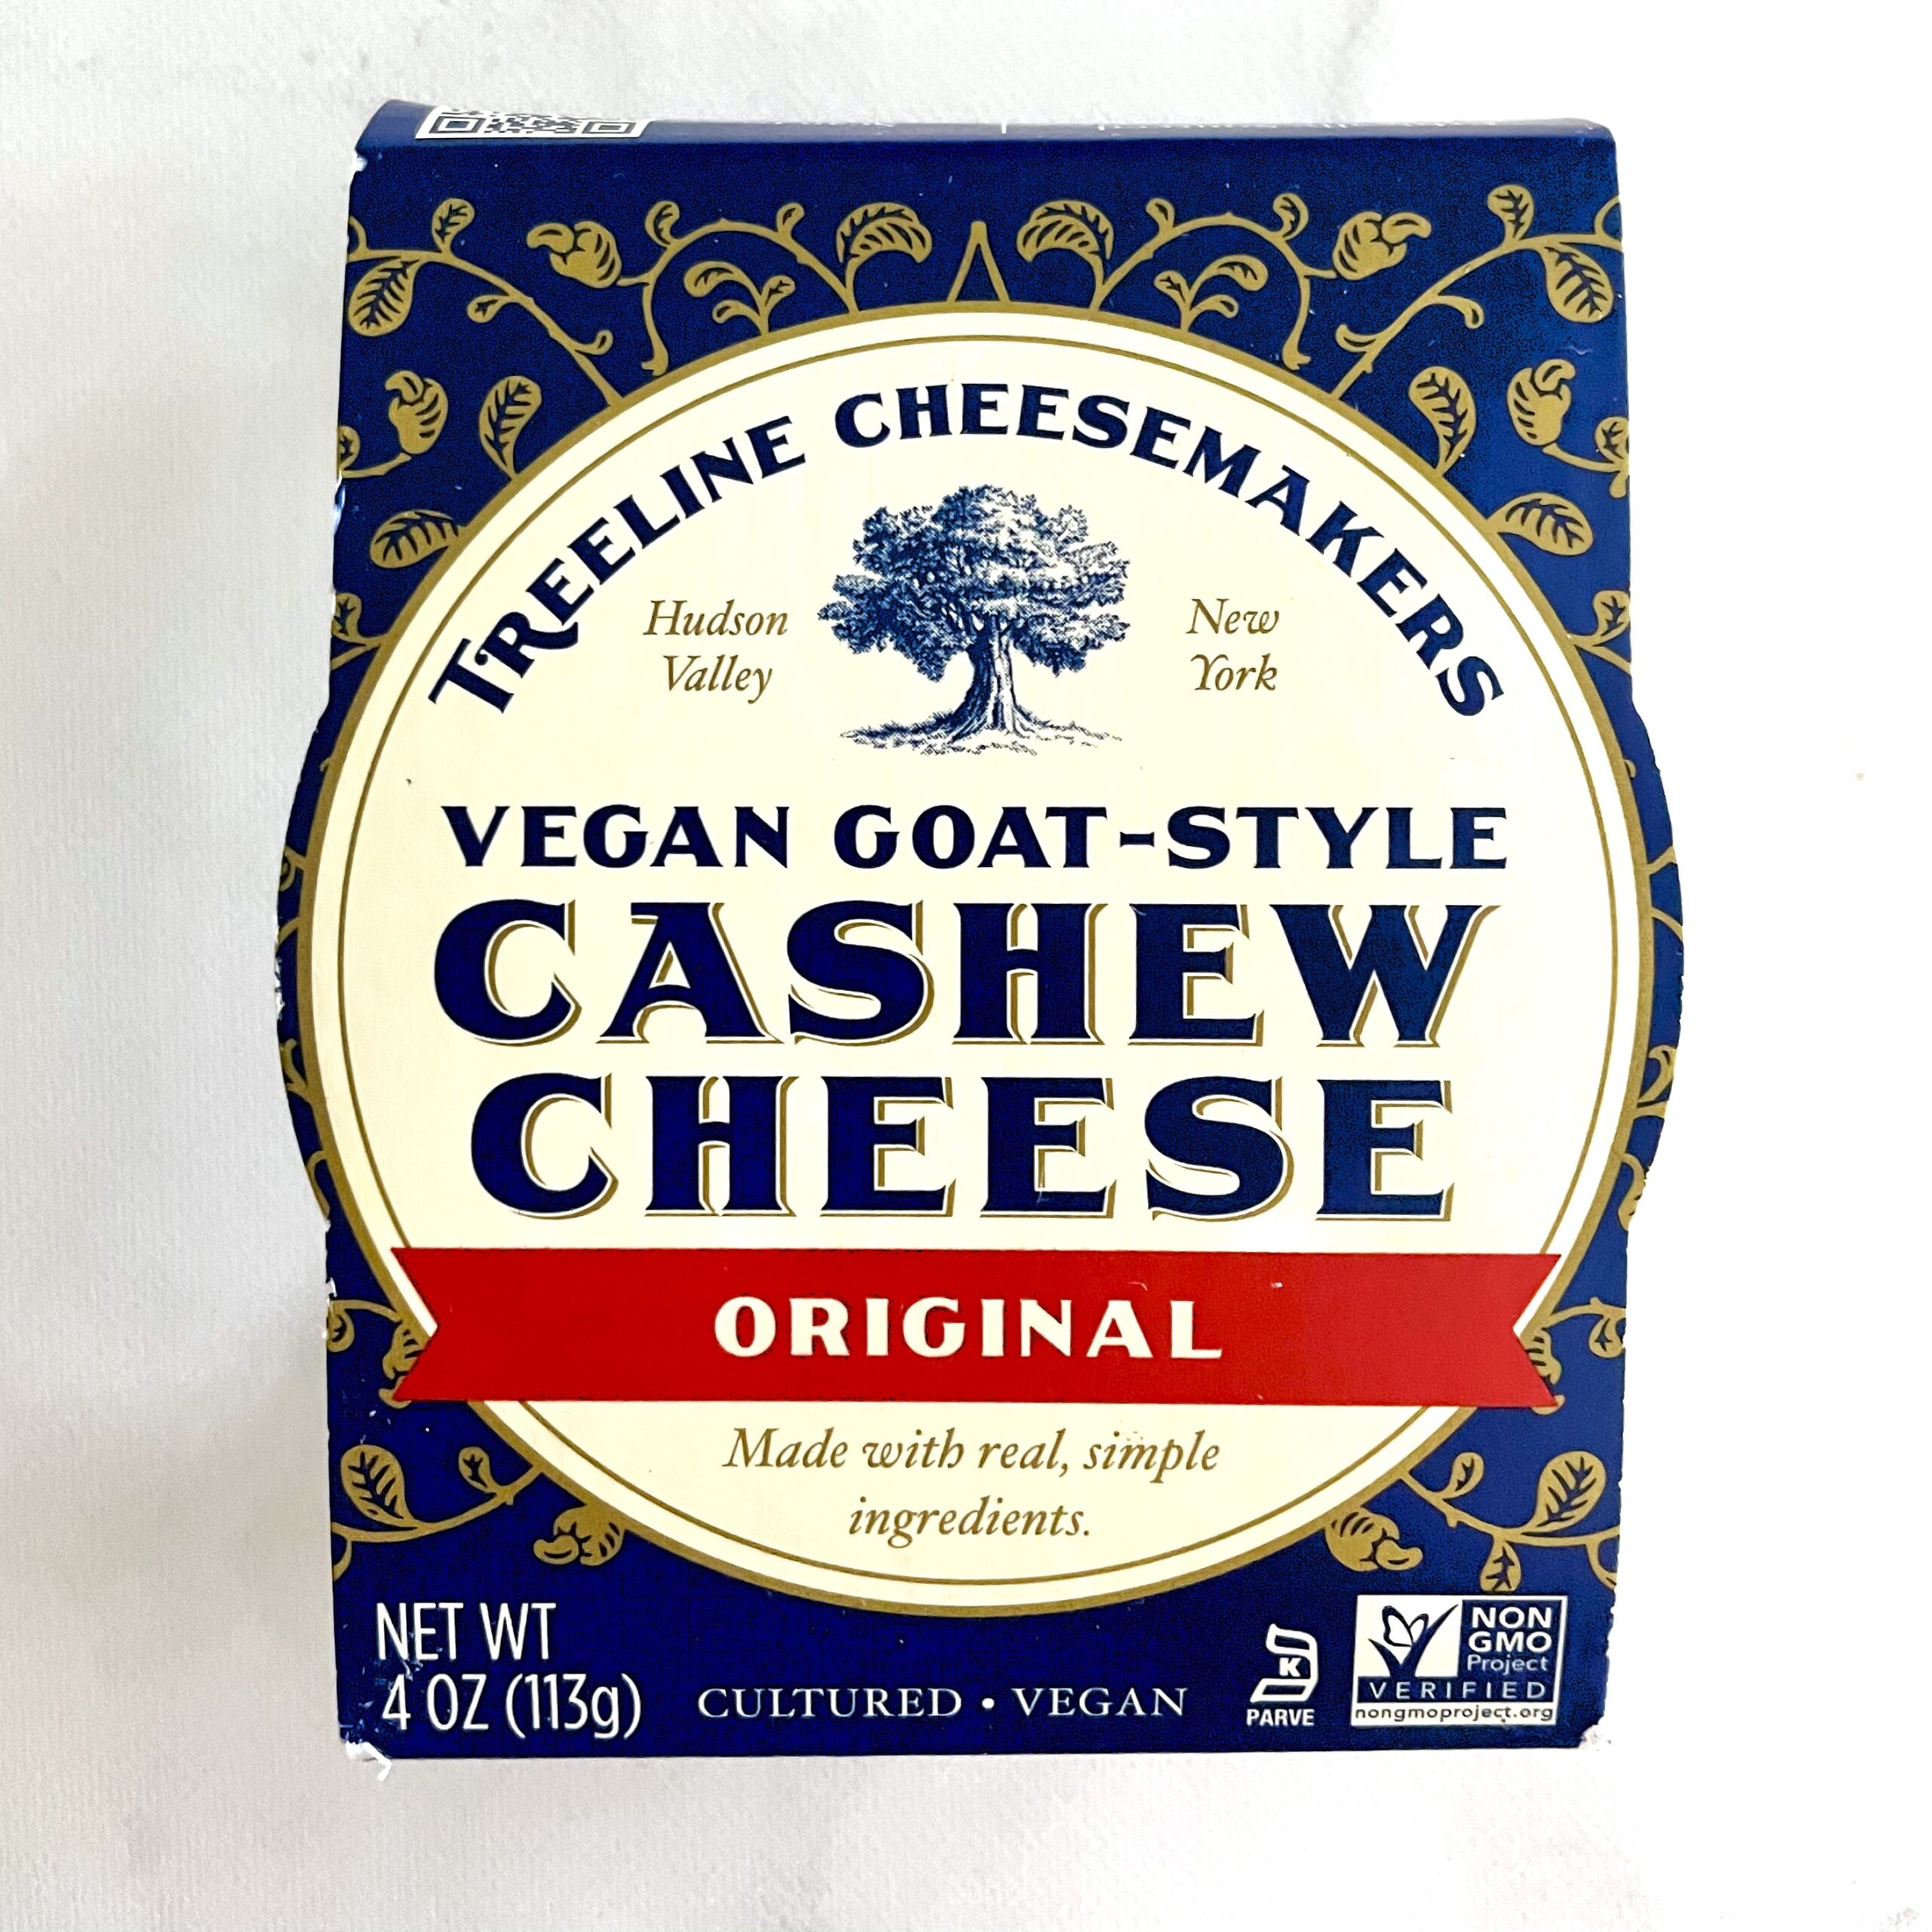 treeline vegan goat style cashew cheese